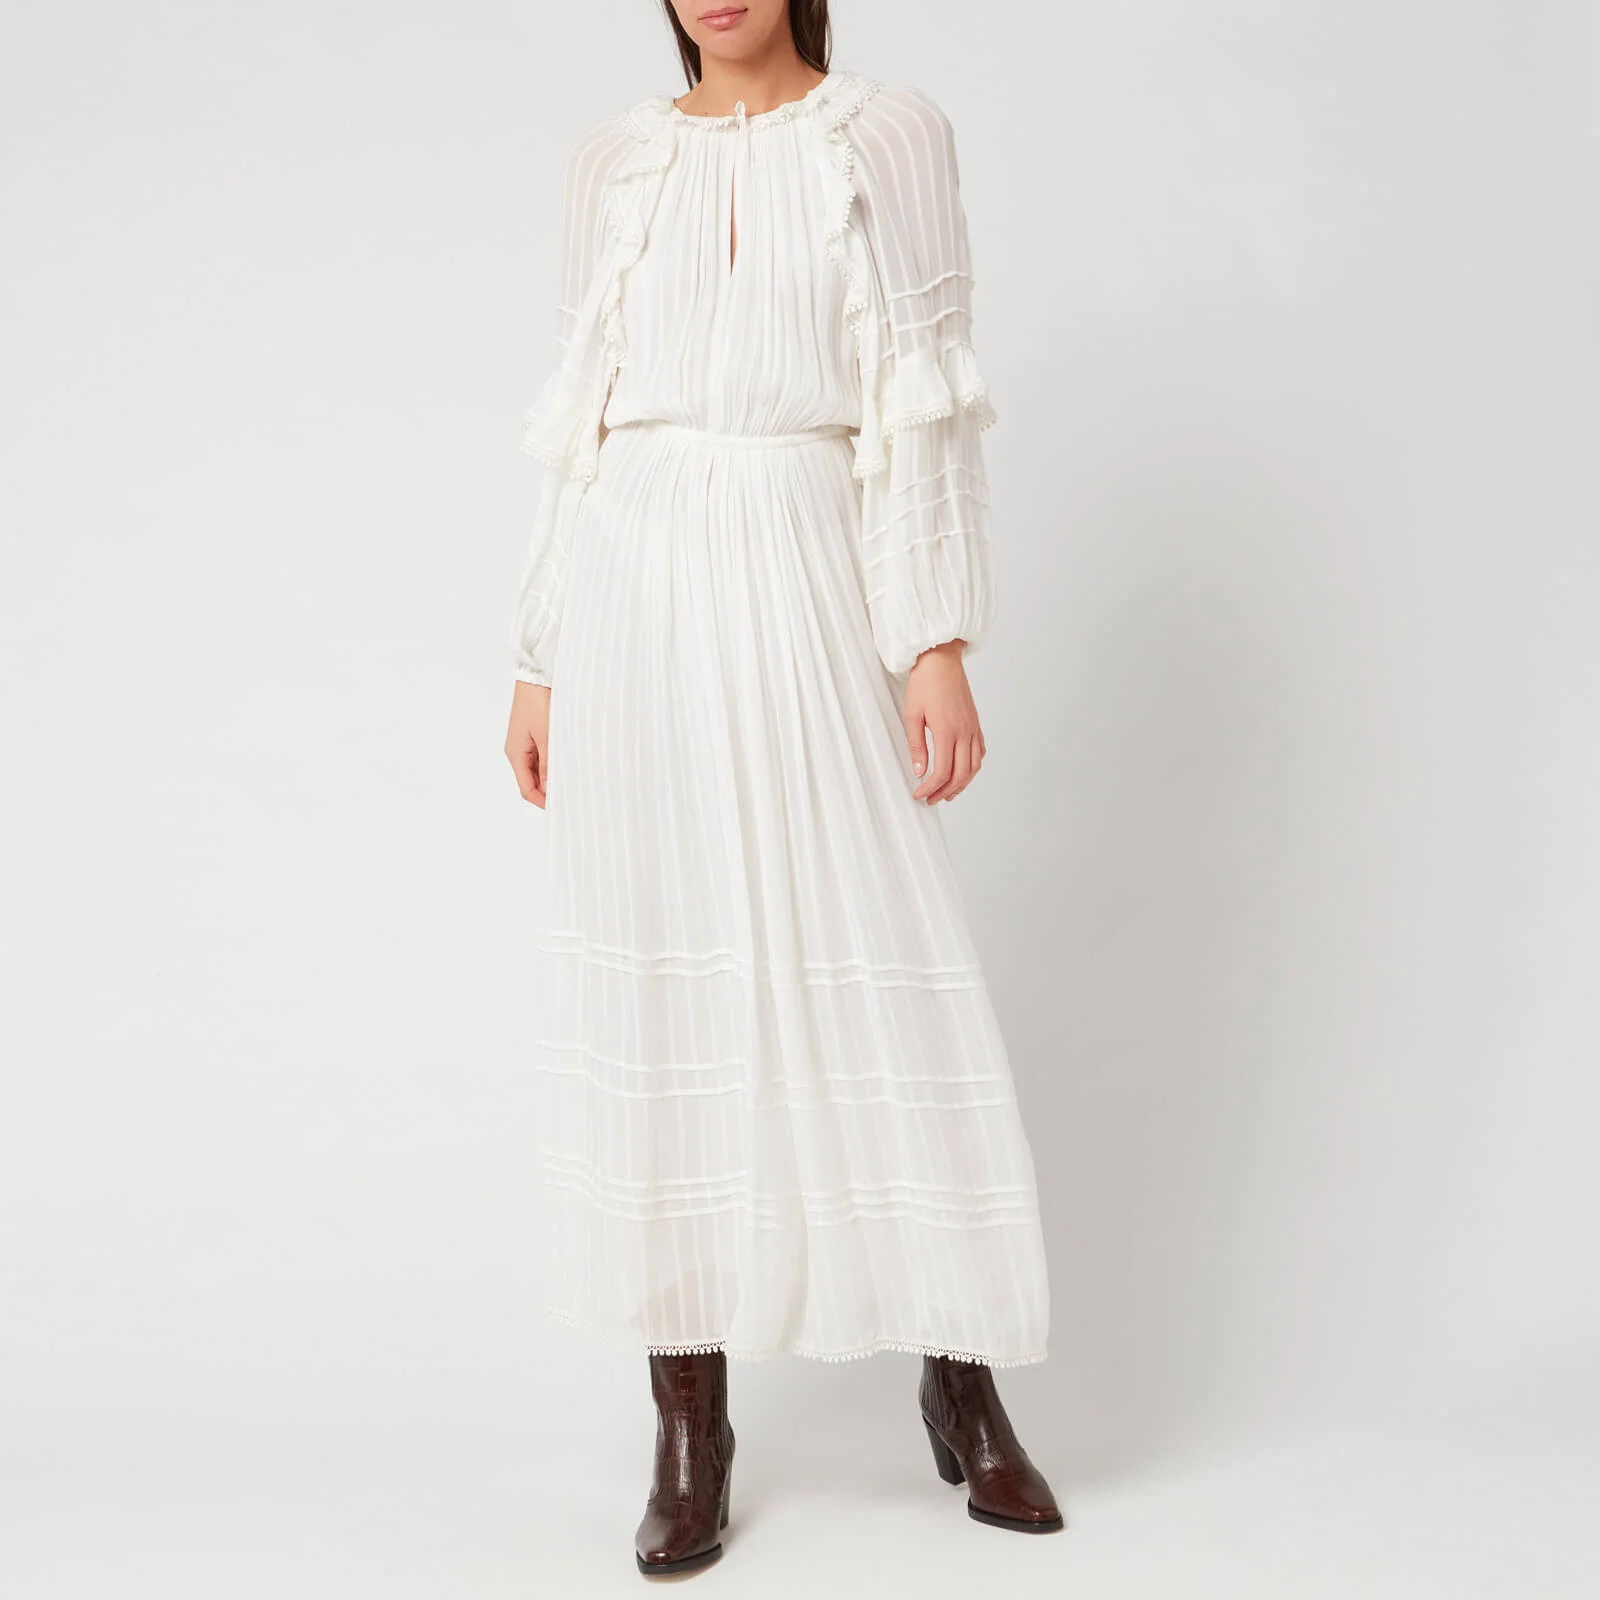 Marant Etoile Women's Justine Dress - White Image 1